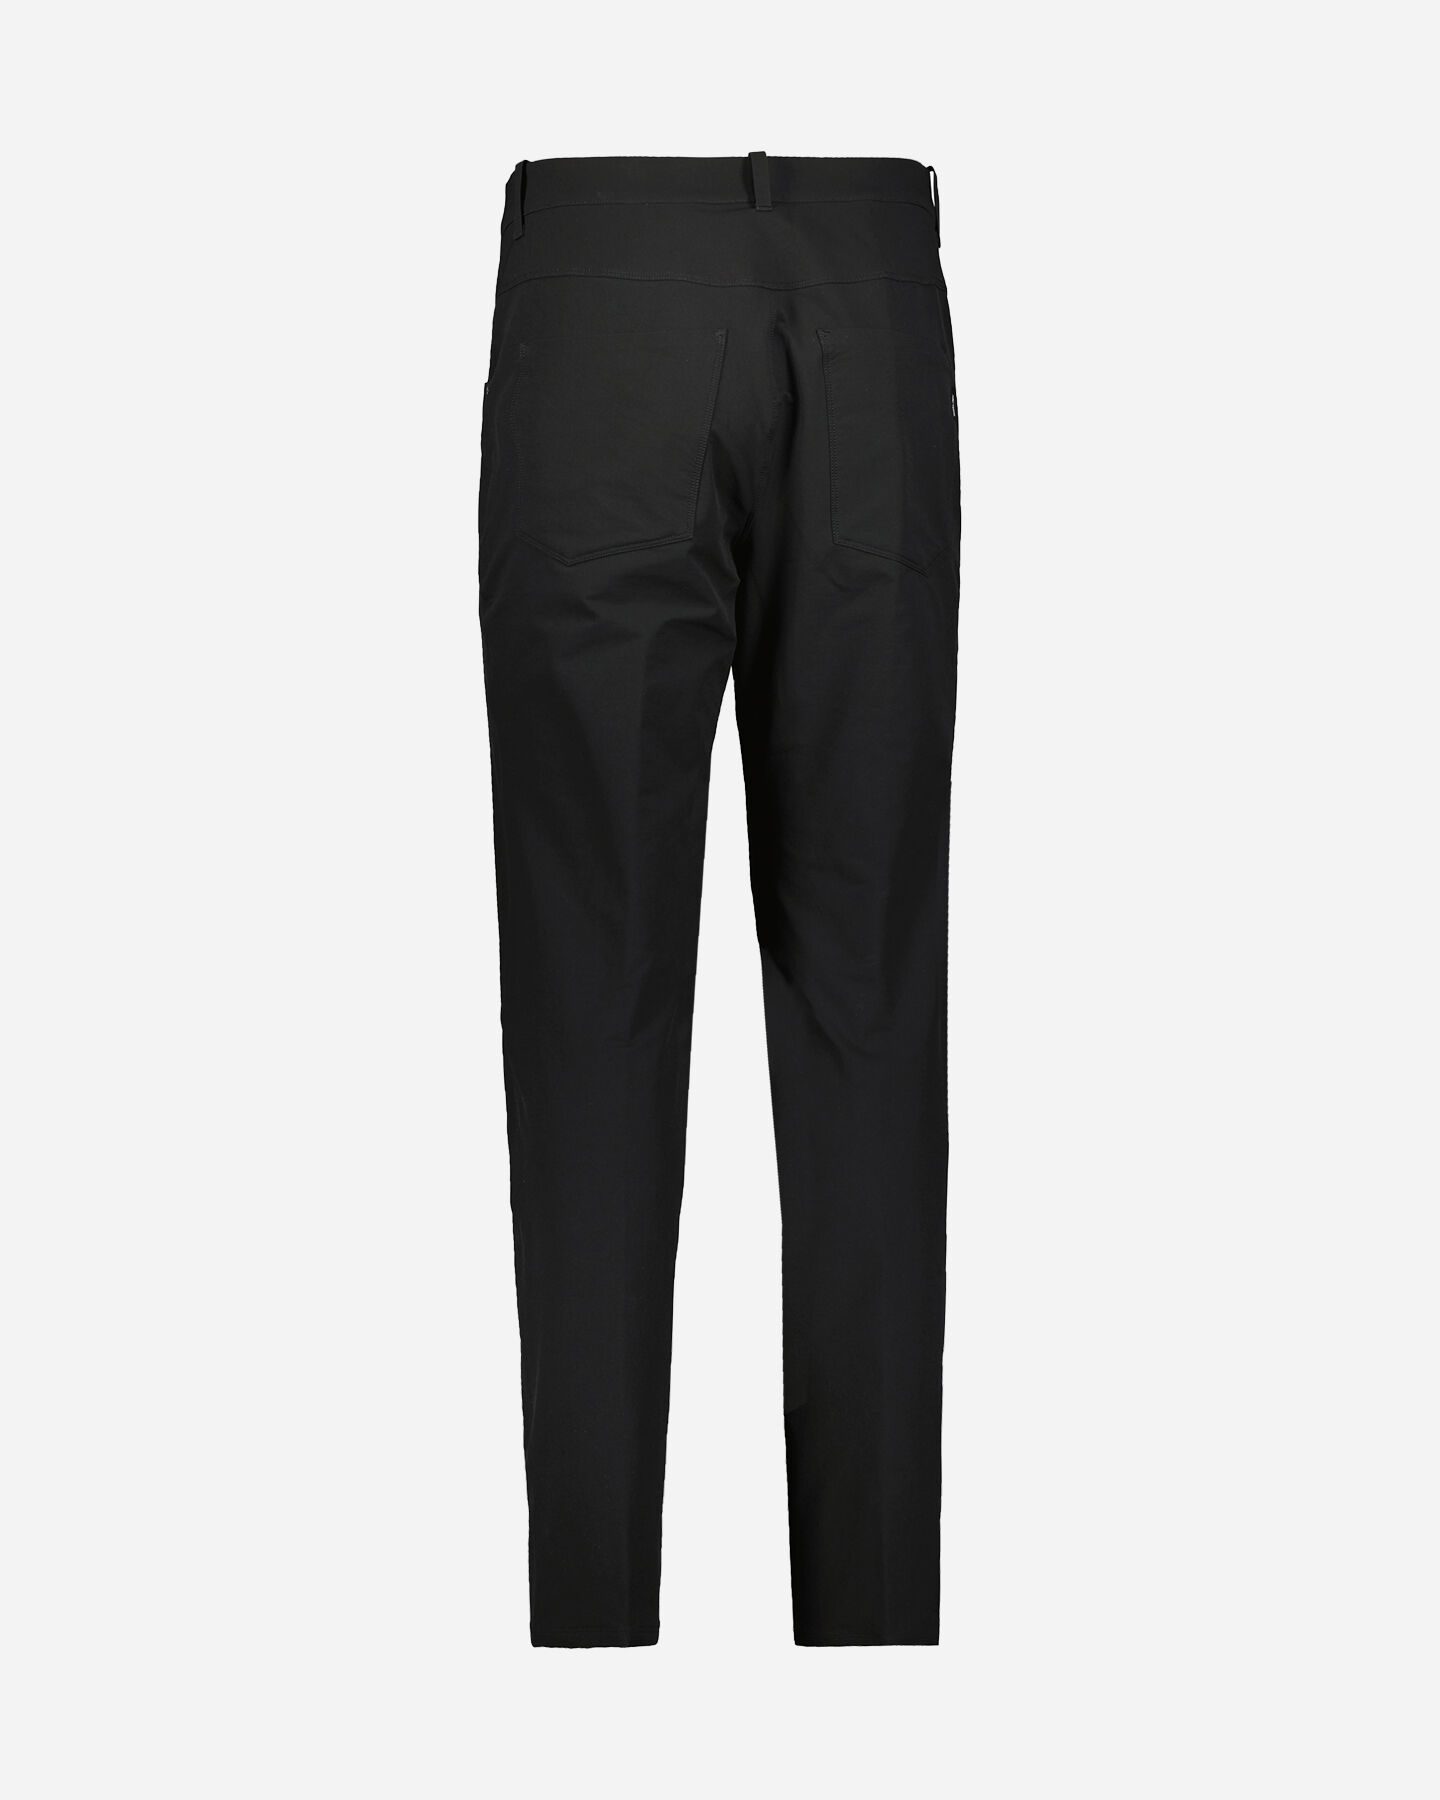  Pantalone outdoor ARC'TERYX LEVON M S4114882|1|30-R scatto 2